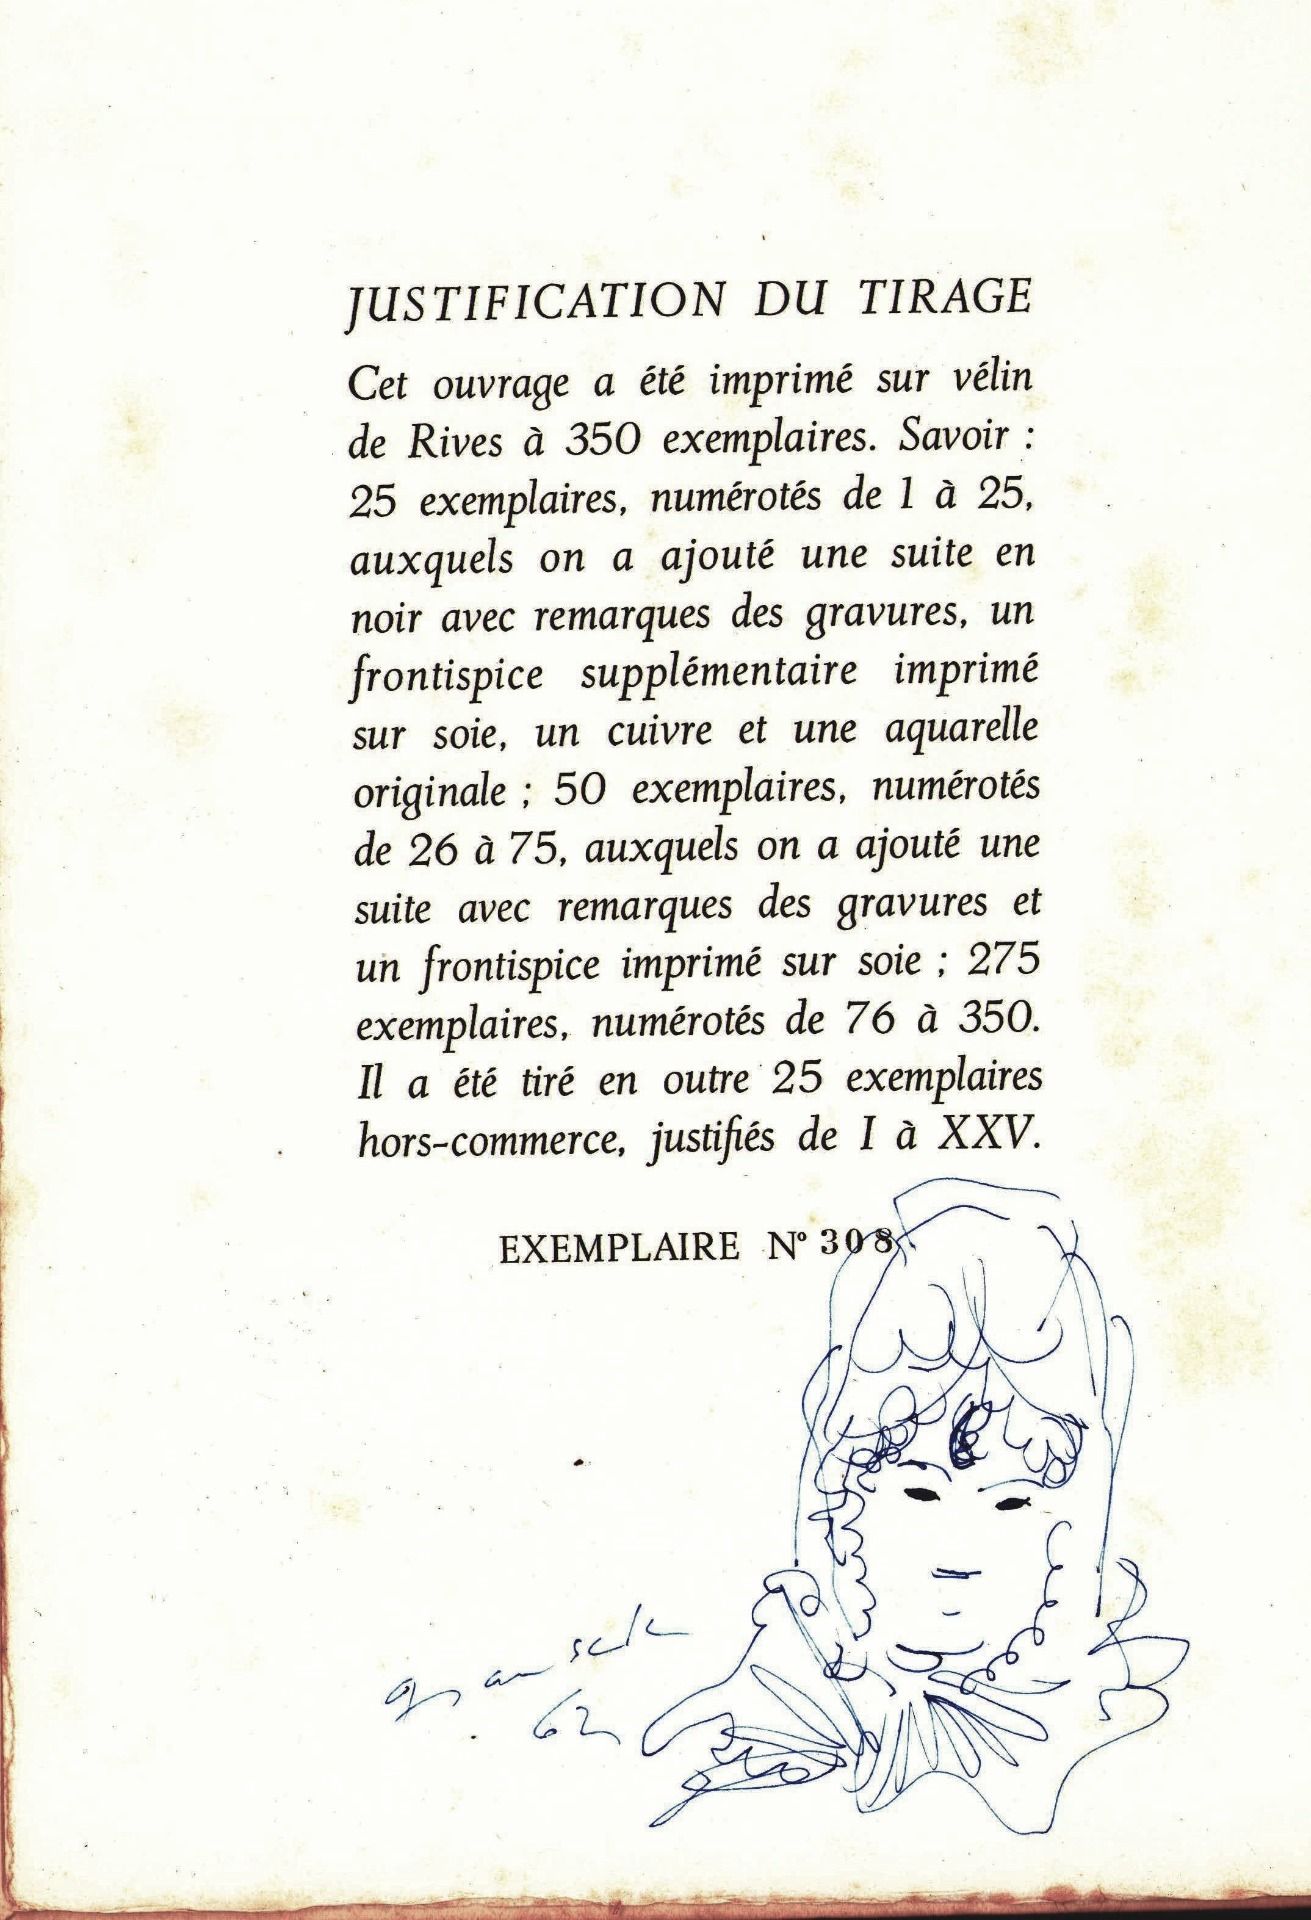 |Illustré| Lorca Federico Garcia, "Romancero Gitan", illustrations de Grau-Sala, 1960 - Image 2 of 9